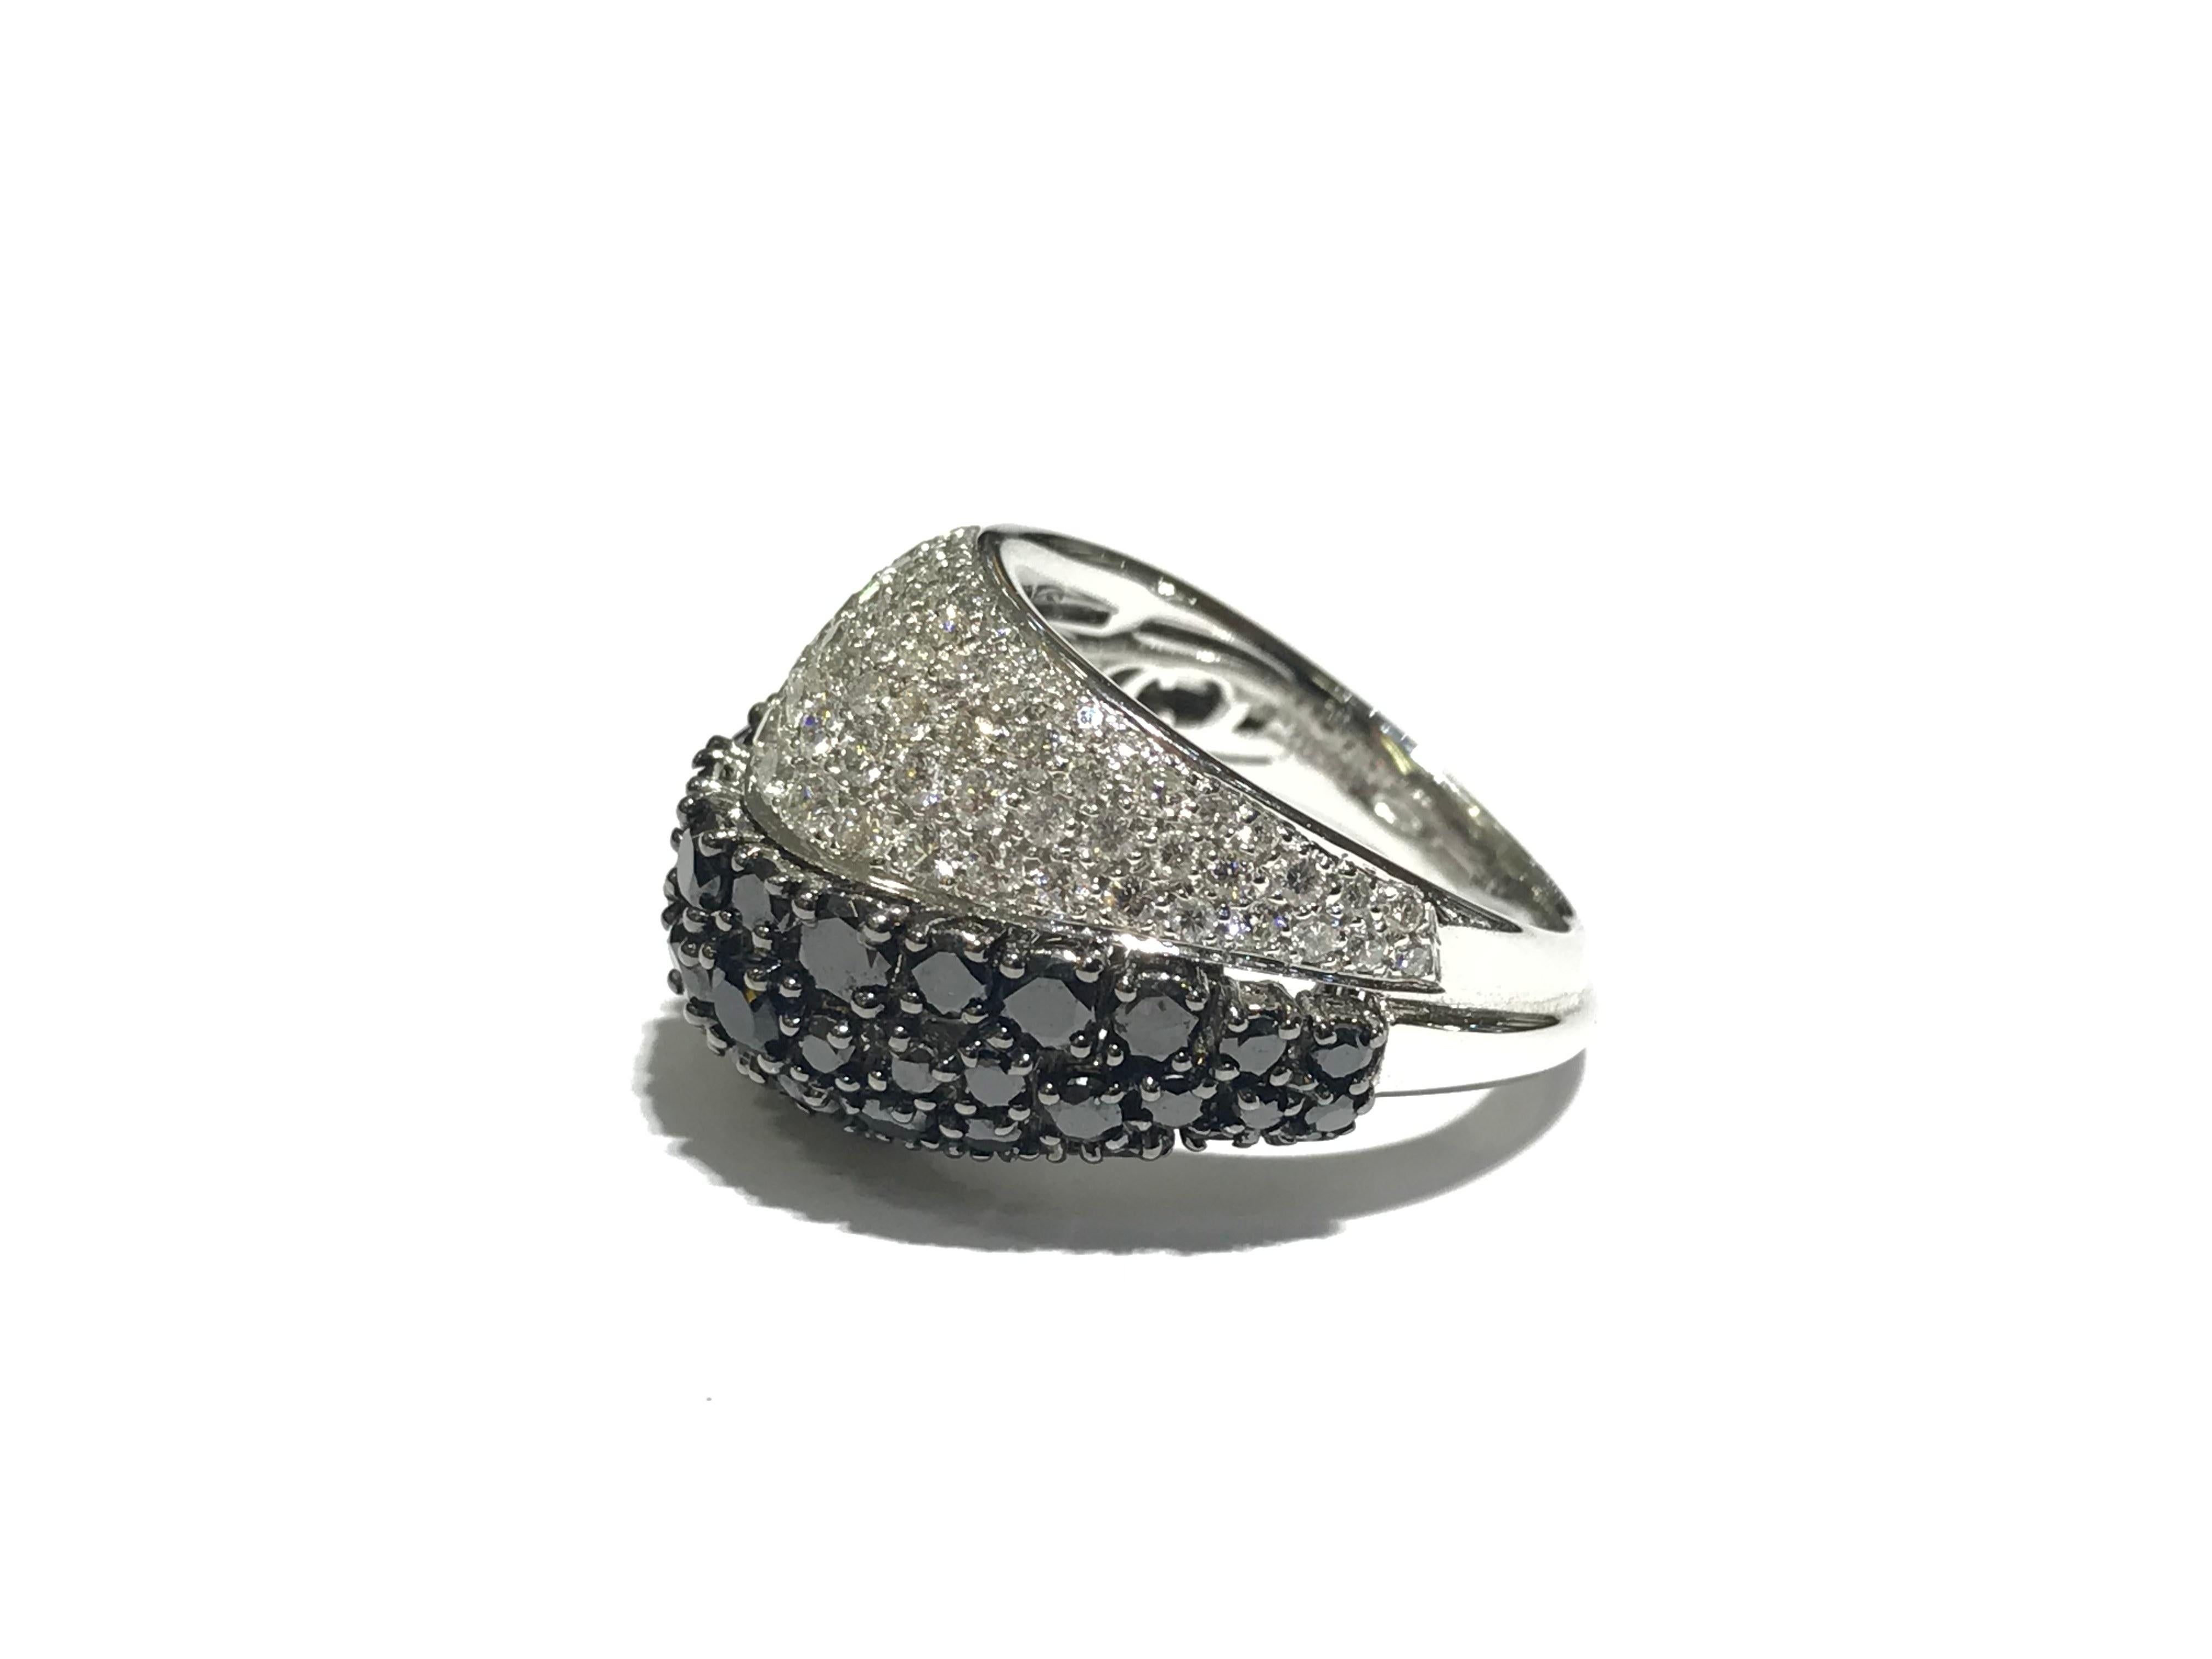 Chimento 18 karat white gold black and white diamond ring with 3.76carat diamond
Preziosa ring collection by Chimento Italian Designer 
3.76 carats of diamonds 
